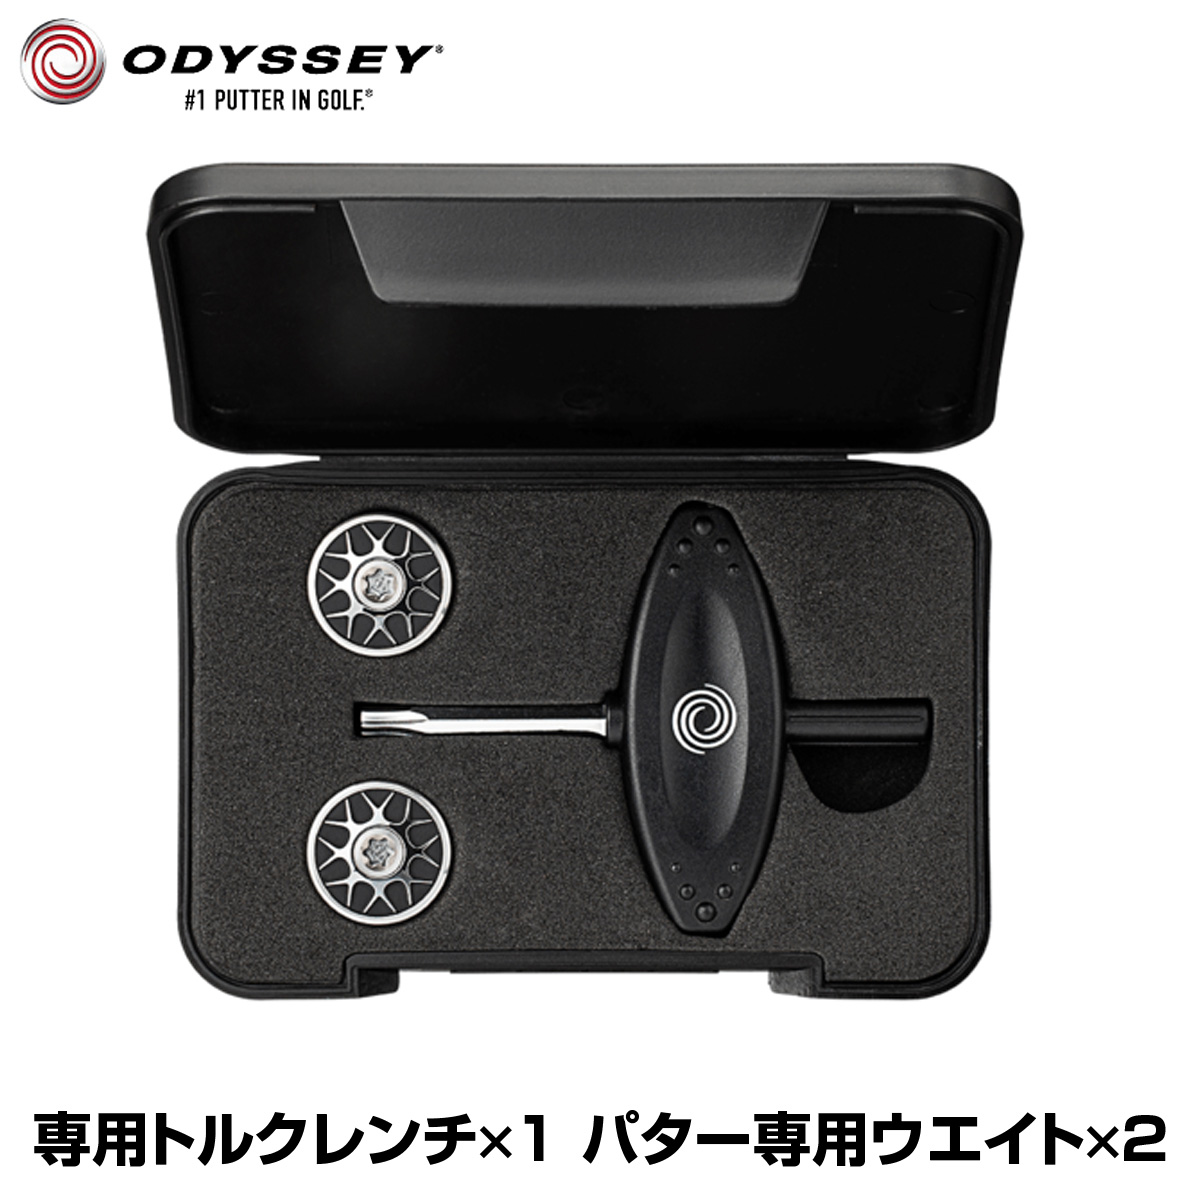  ODYSSEY(オデッセイ)日本正規品 オデッセイパター専用 WEIGHT KIT(ウェイトキット) 専用ケース入り (専用レンチ×1個、パター専用ウェイト×2個) 